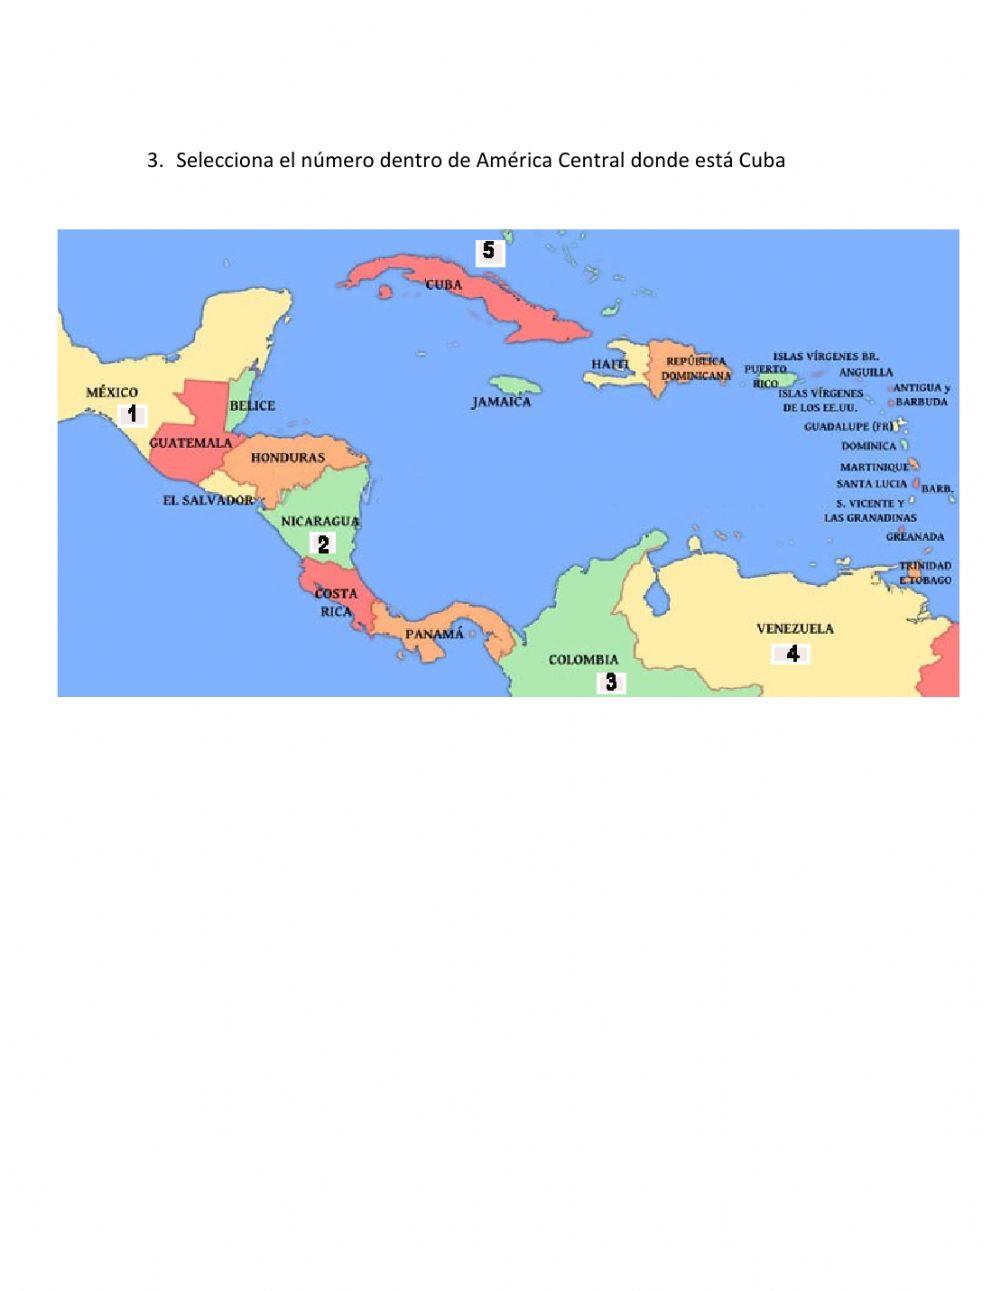 Donde está Cuba?